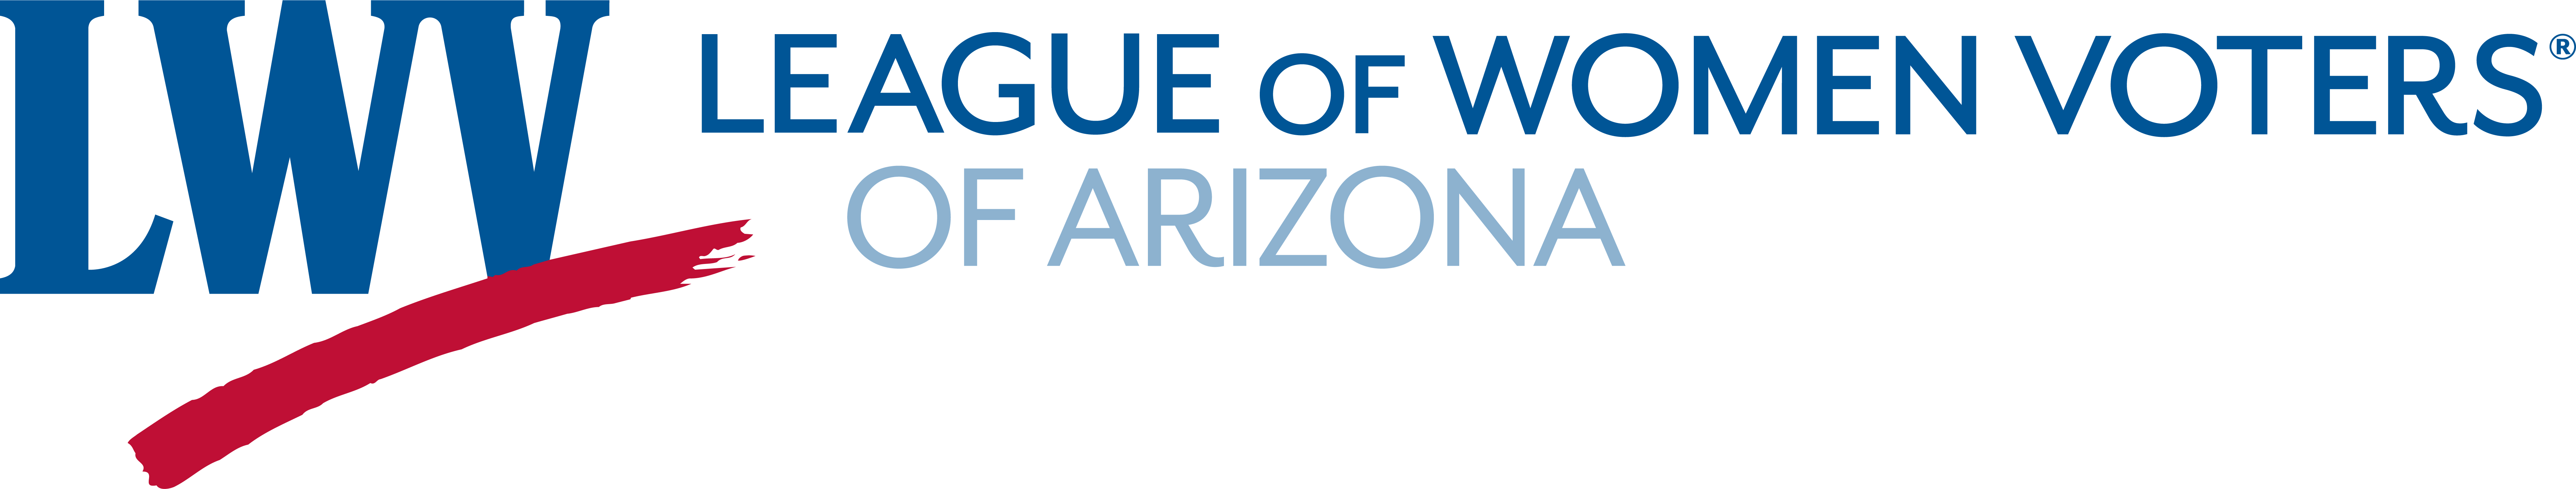 League of Women Voters of Arizona